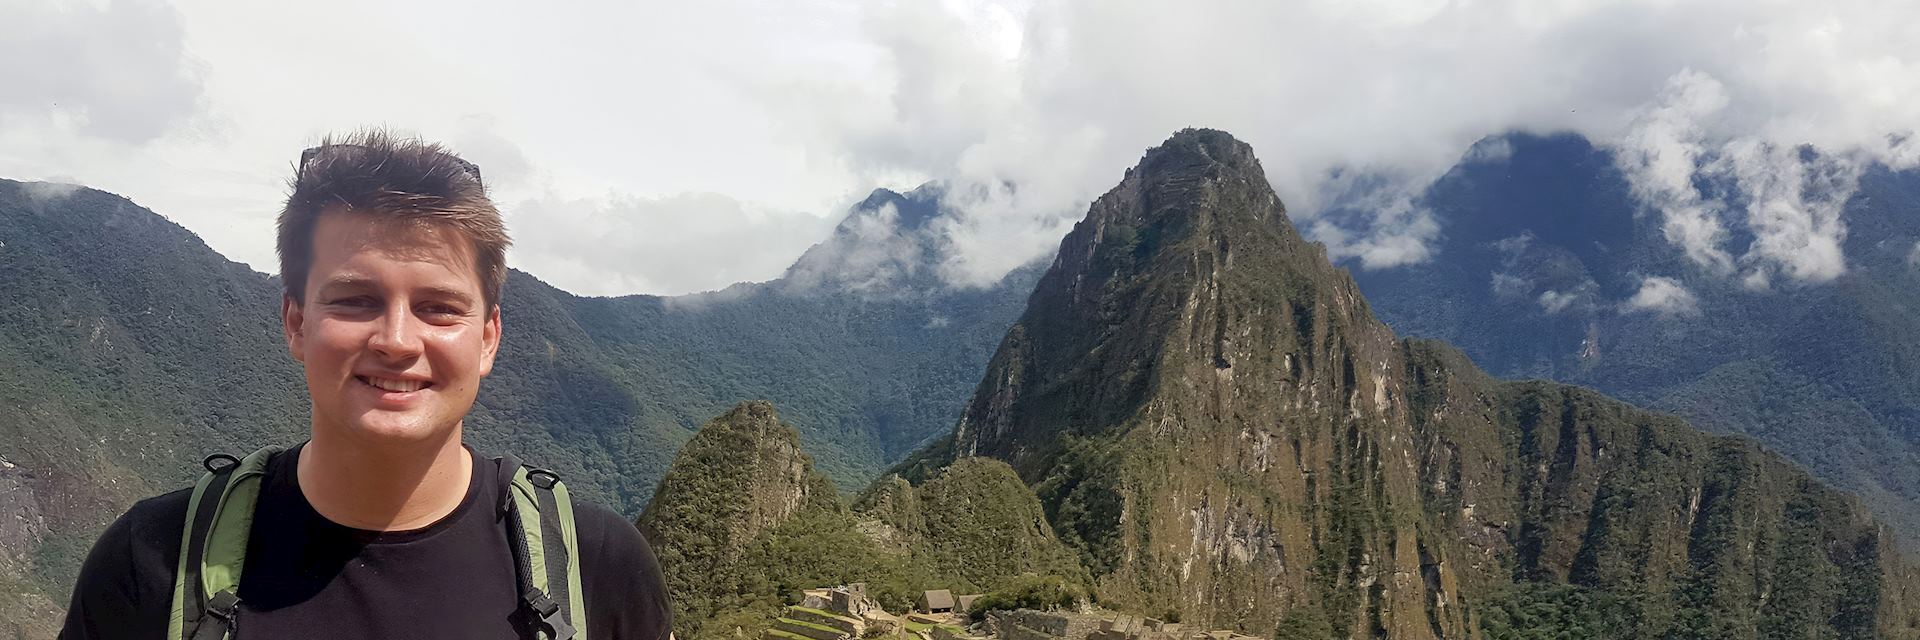 Jonny at Machu Picchu, Peru